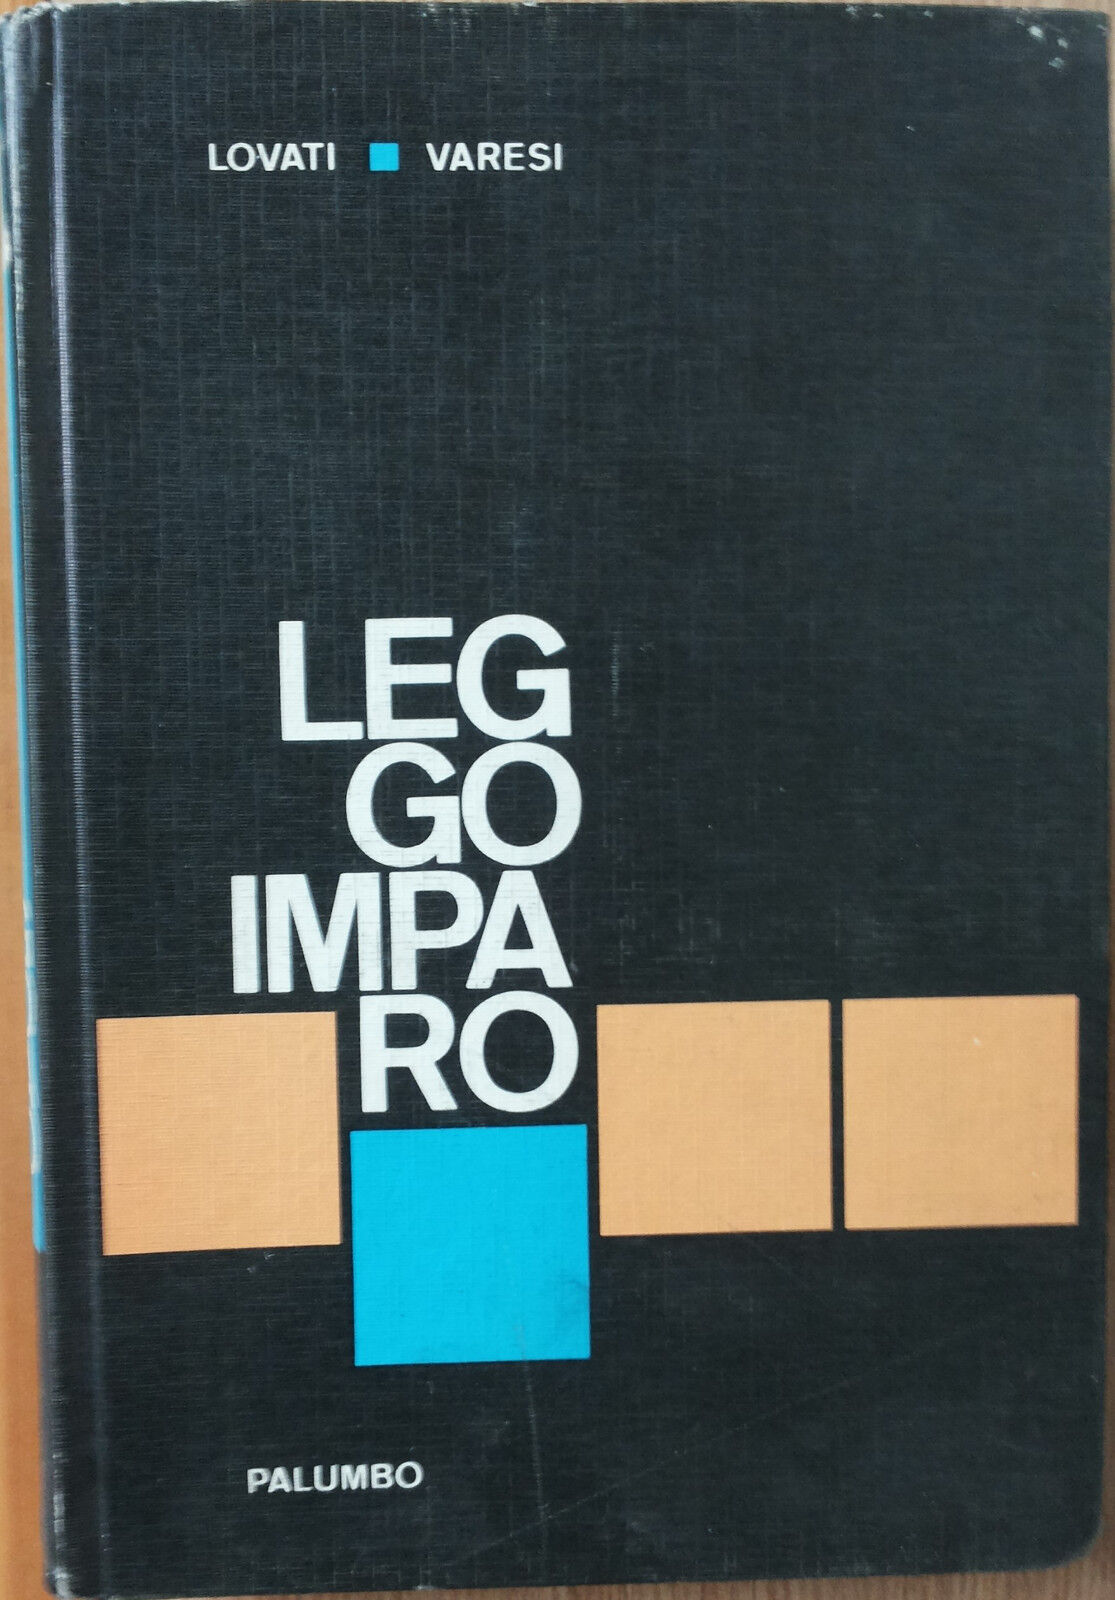 Leggo, imparo - Lovati, Varesi - Palumbo,1965 - R